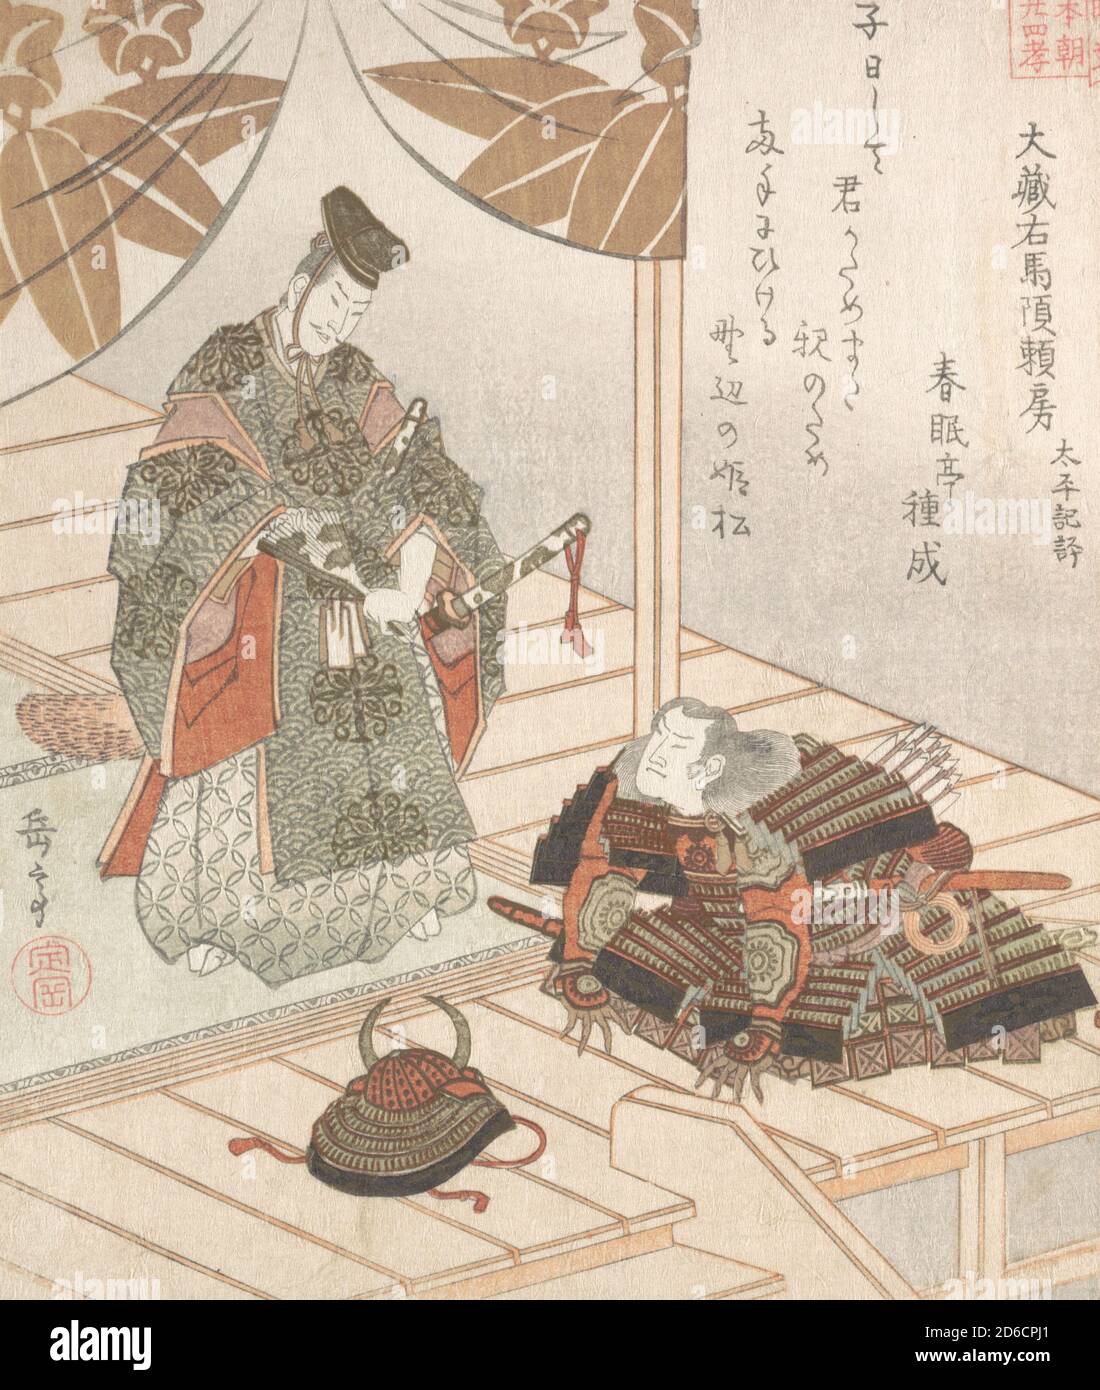 A kunoichi samurai, enhance the kunichi aspect in the artstyle of the verse  empire from aldnoah zero